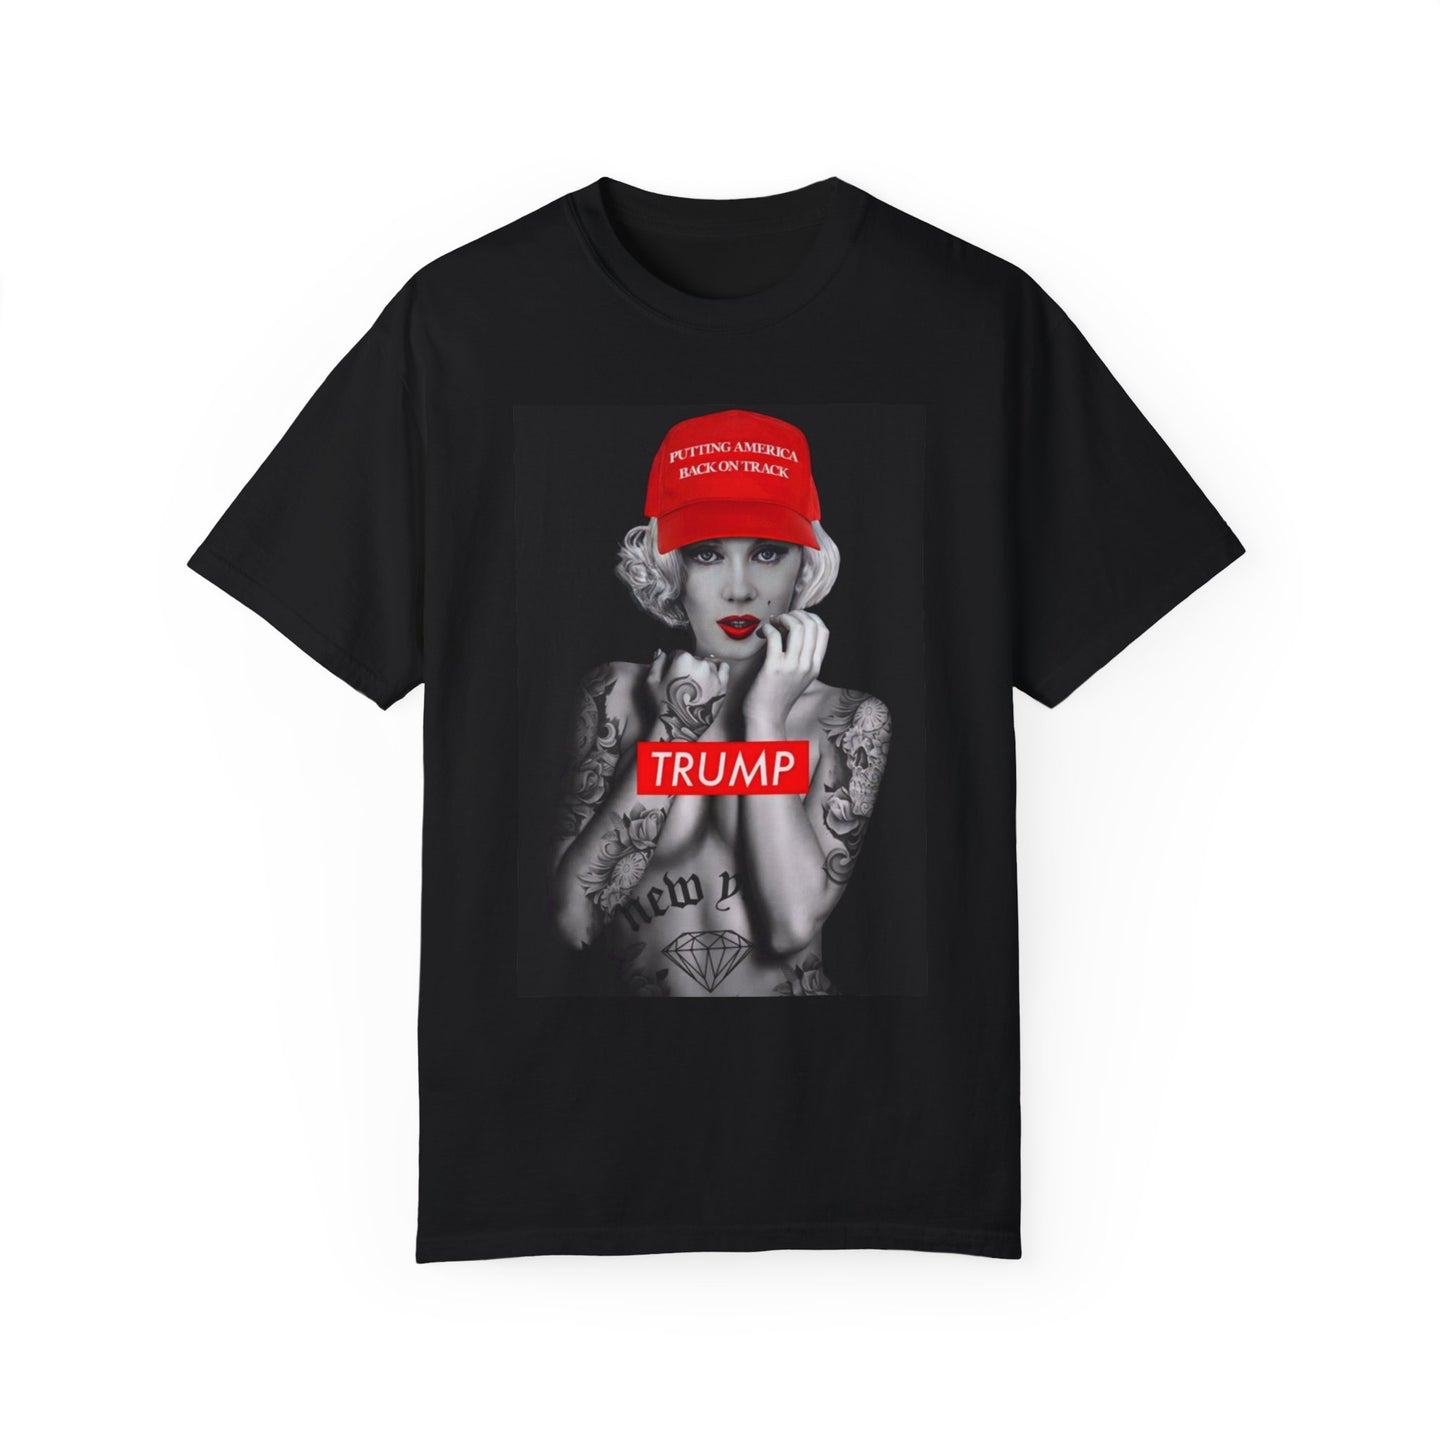 Marilyn Trump Putting America Back on Track T-shirt